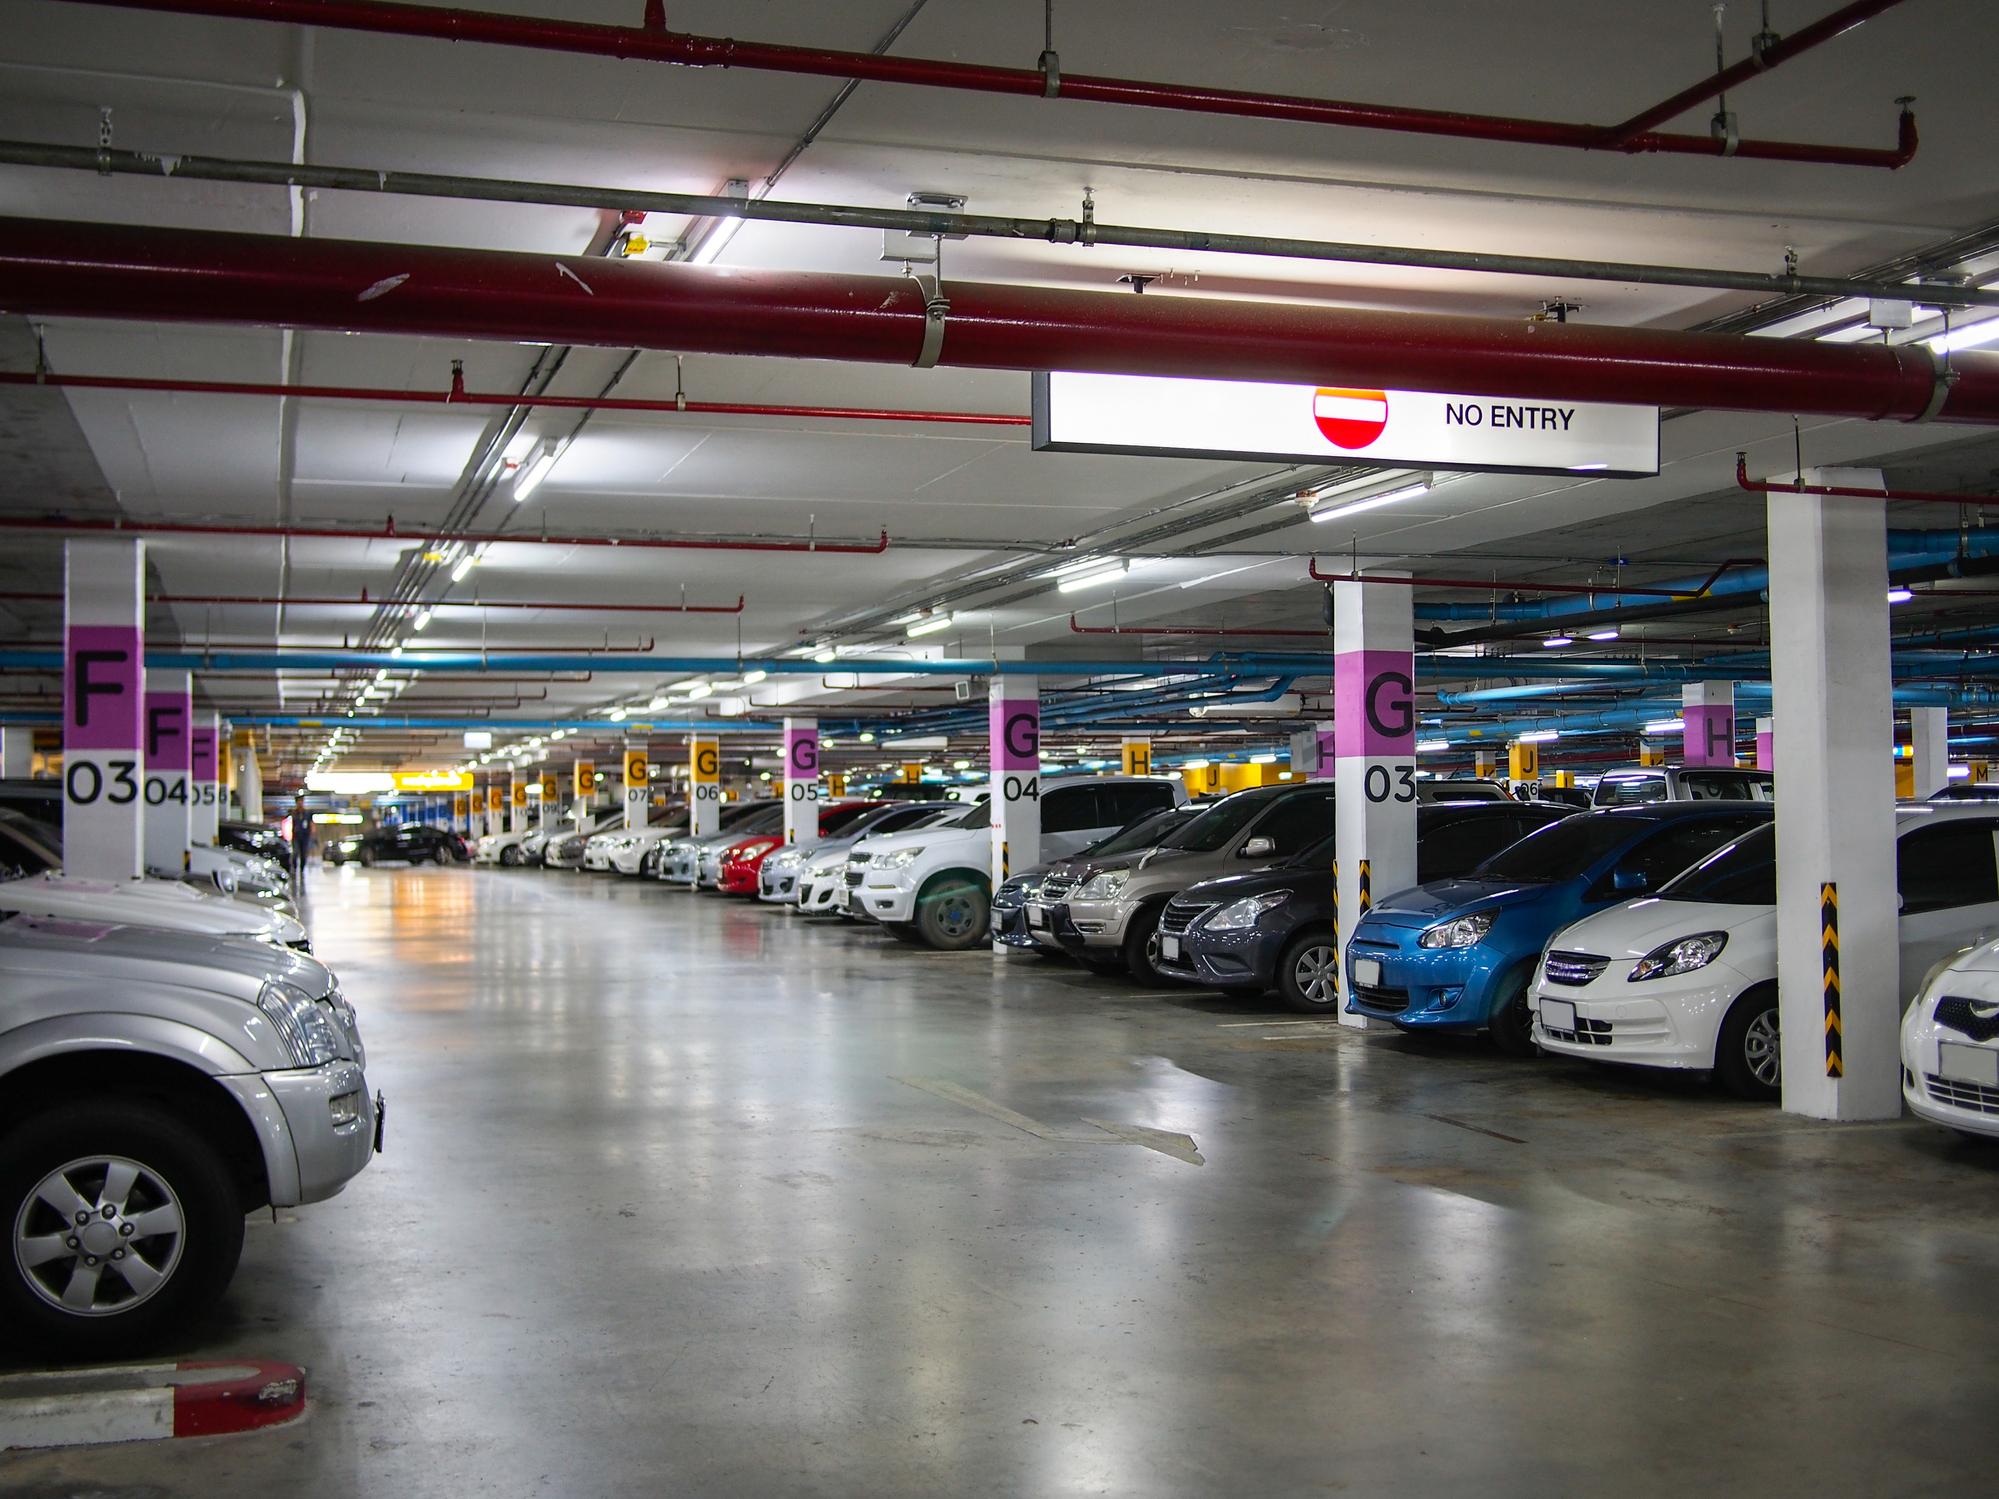 Parking Garage Liability Insurance